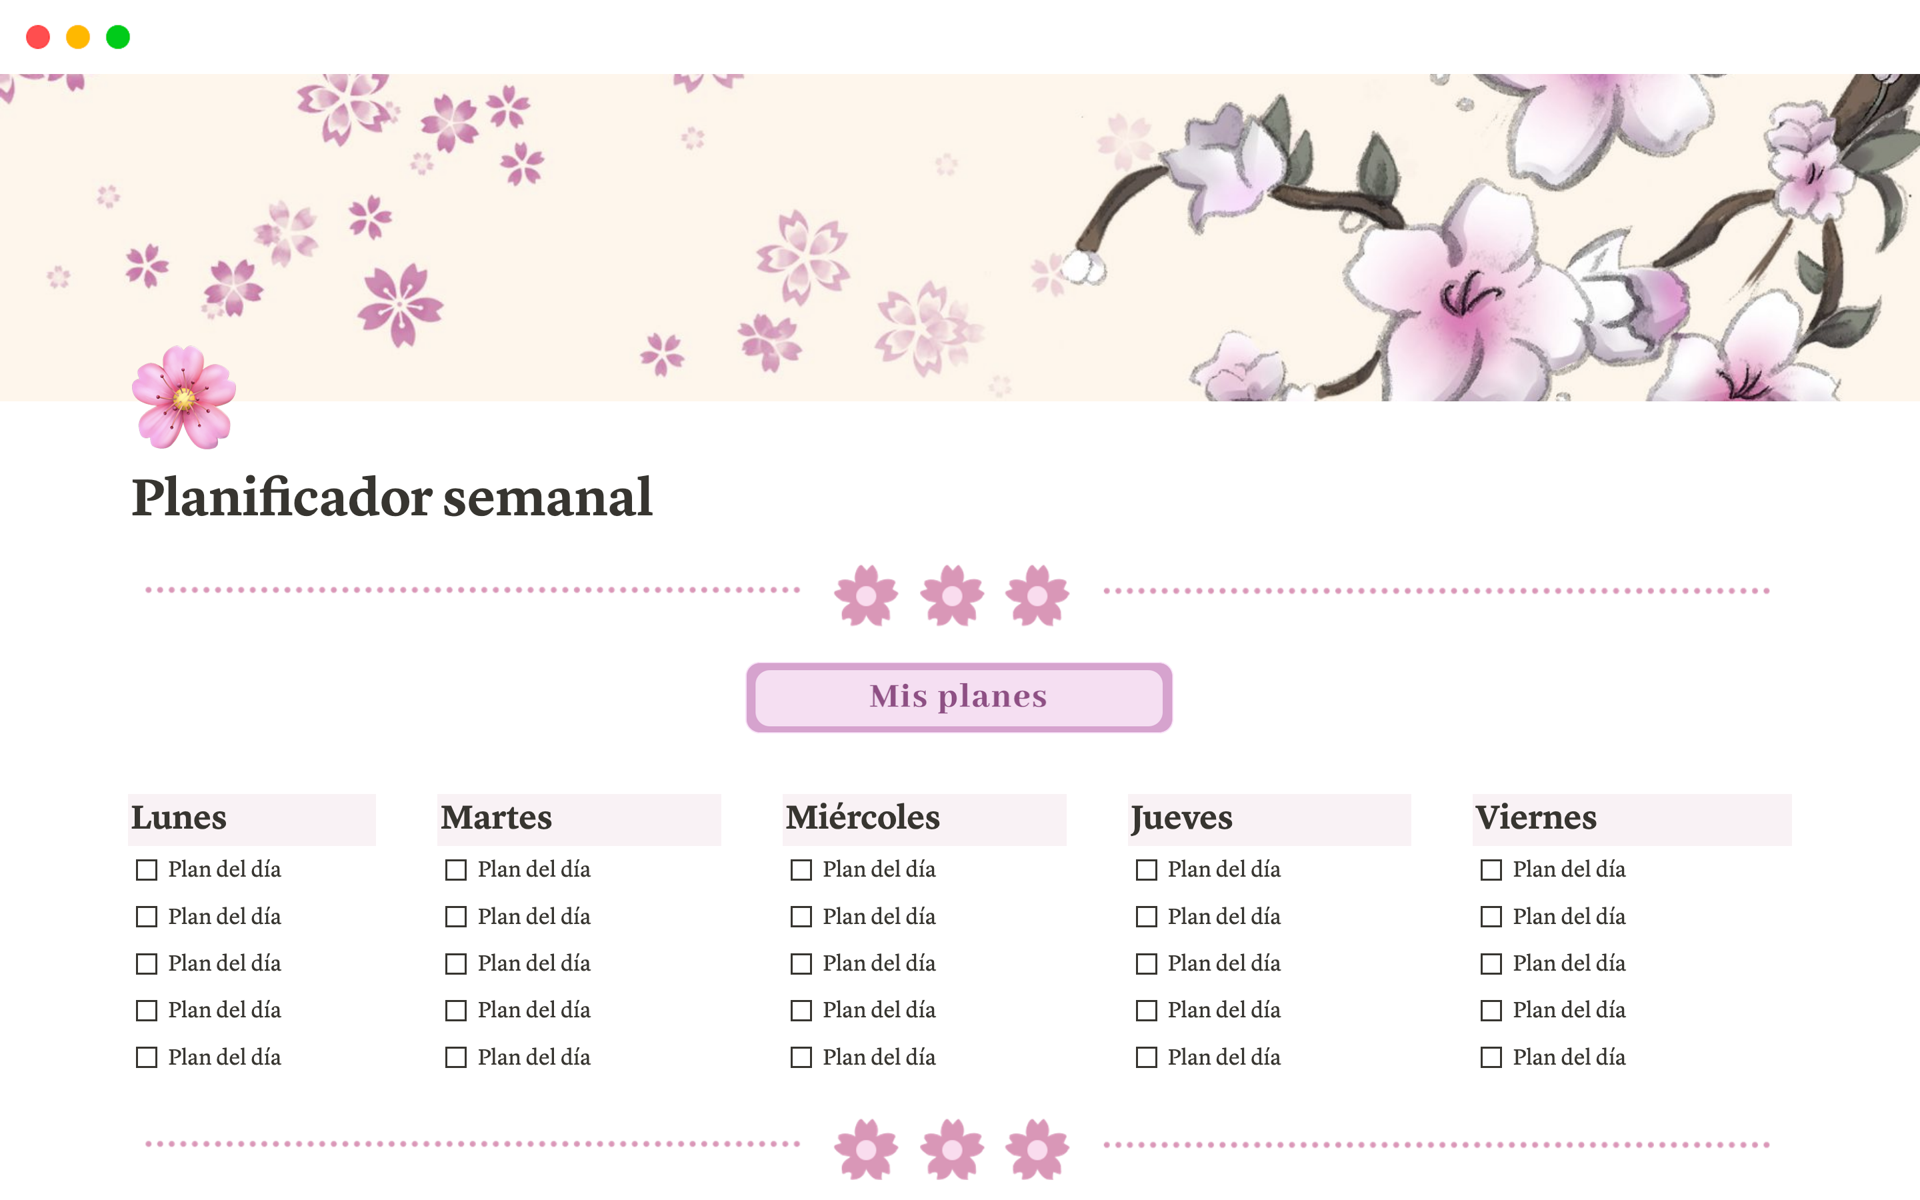 Planificador semanal de estética japonesa con flores Sakura.